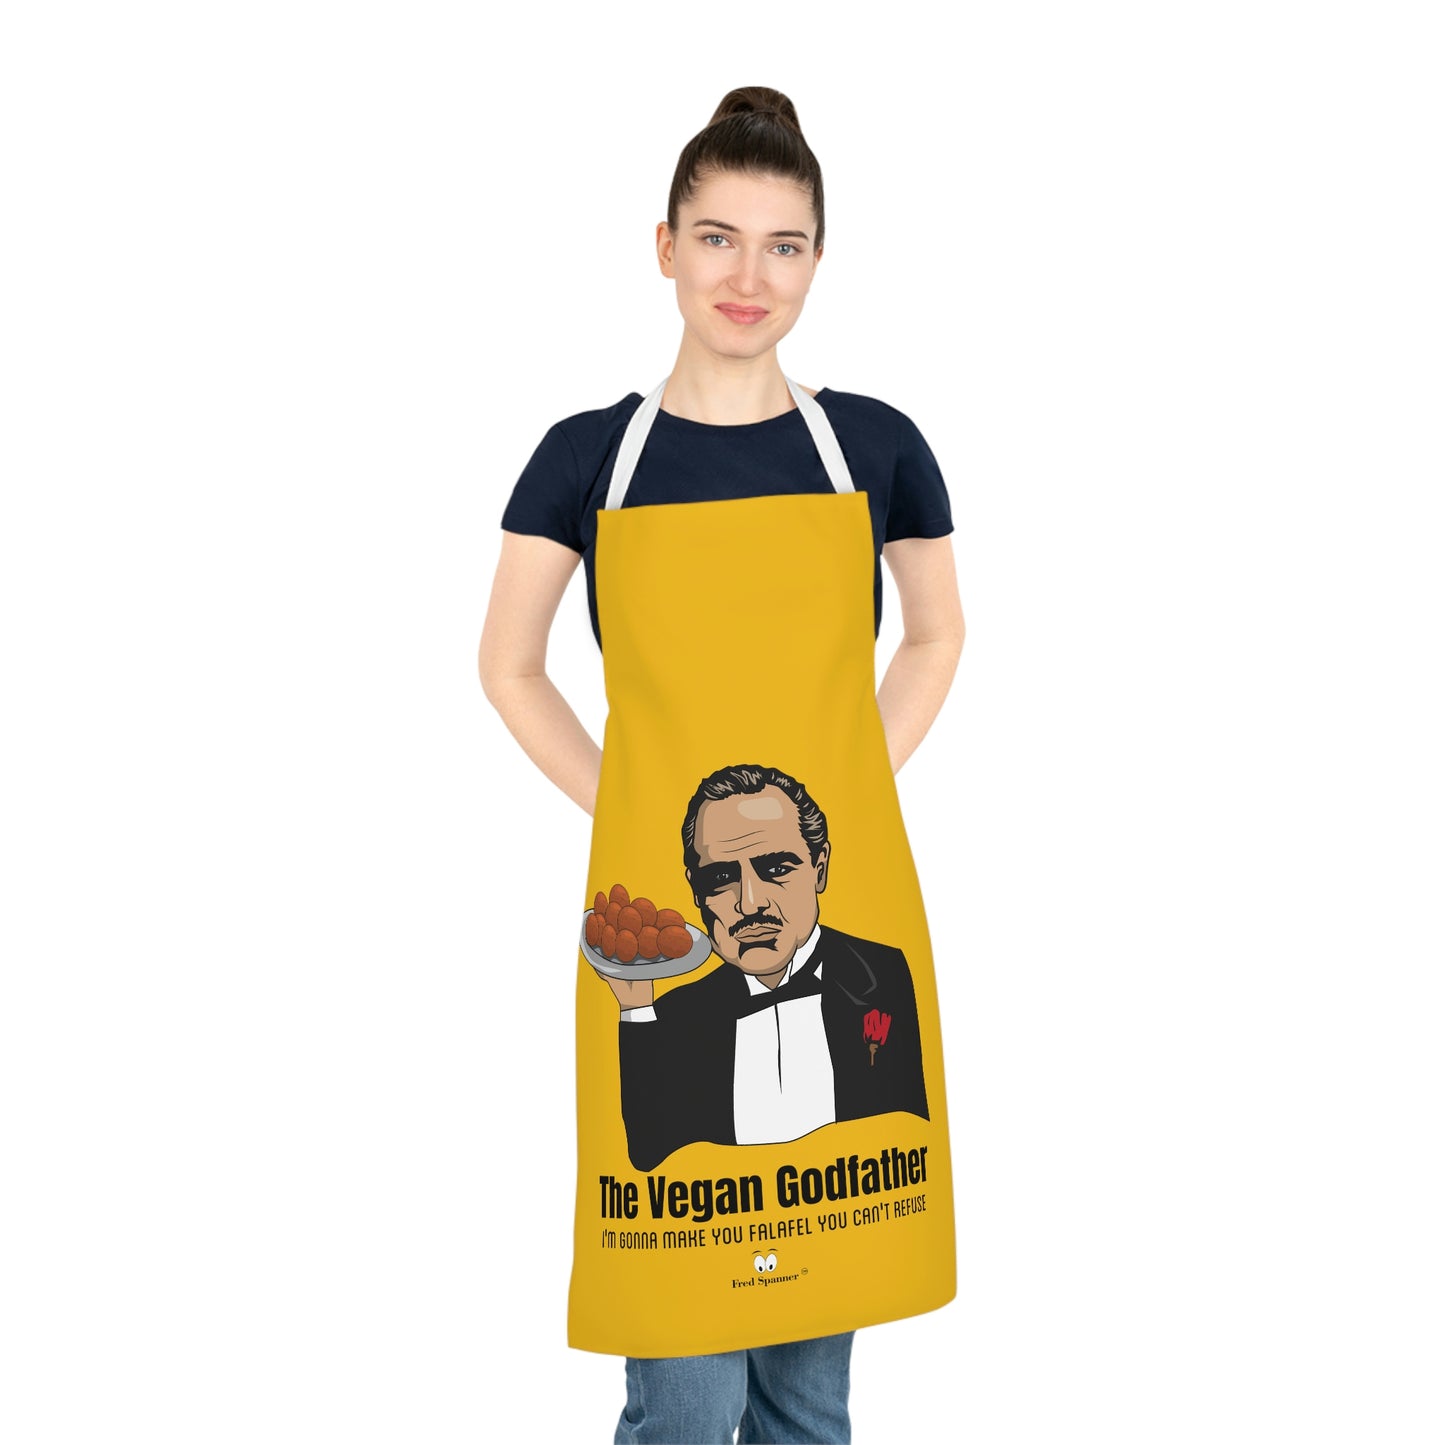 Vegan Godfather apron